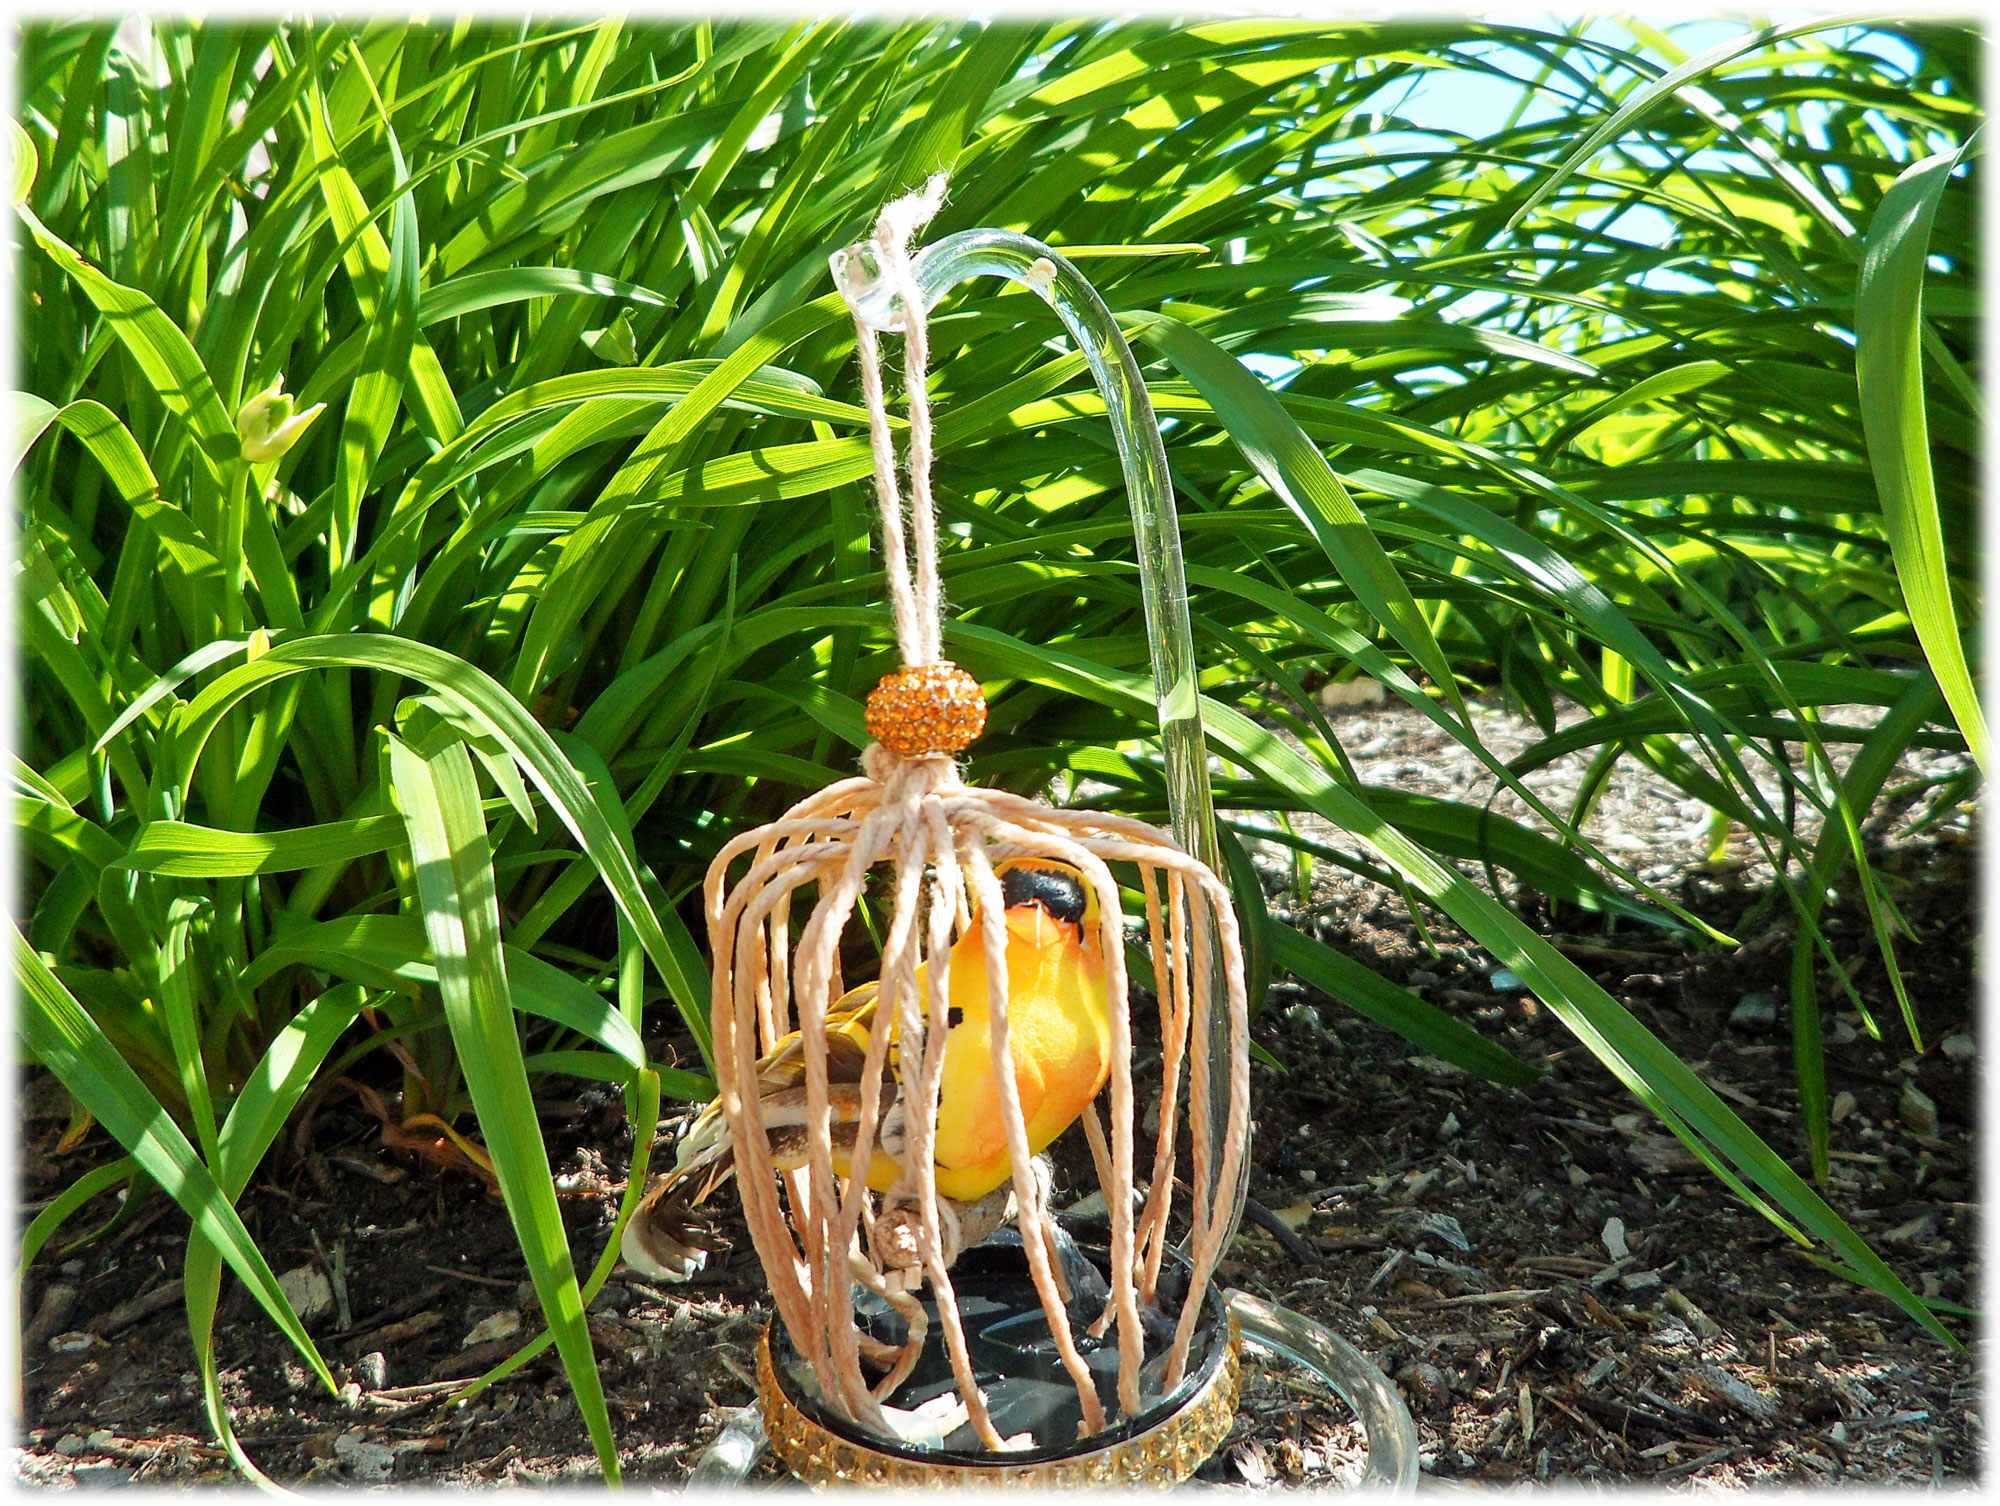 A tiny bird within a DIY bird cage as an ornament | OrnamentShop.com